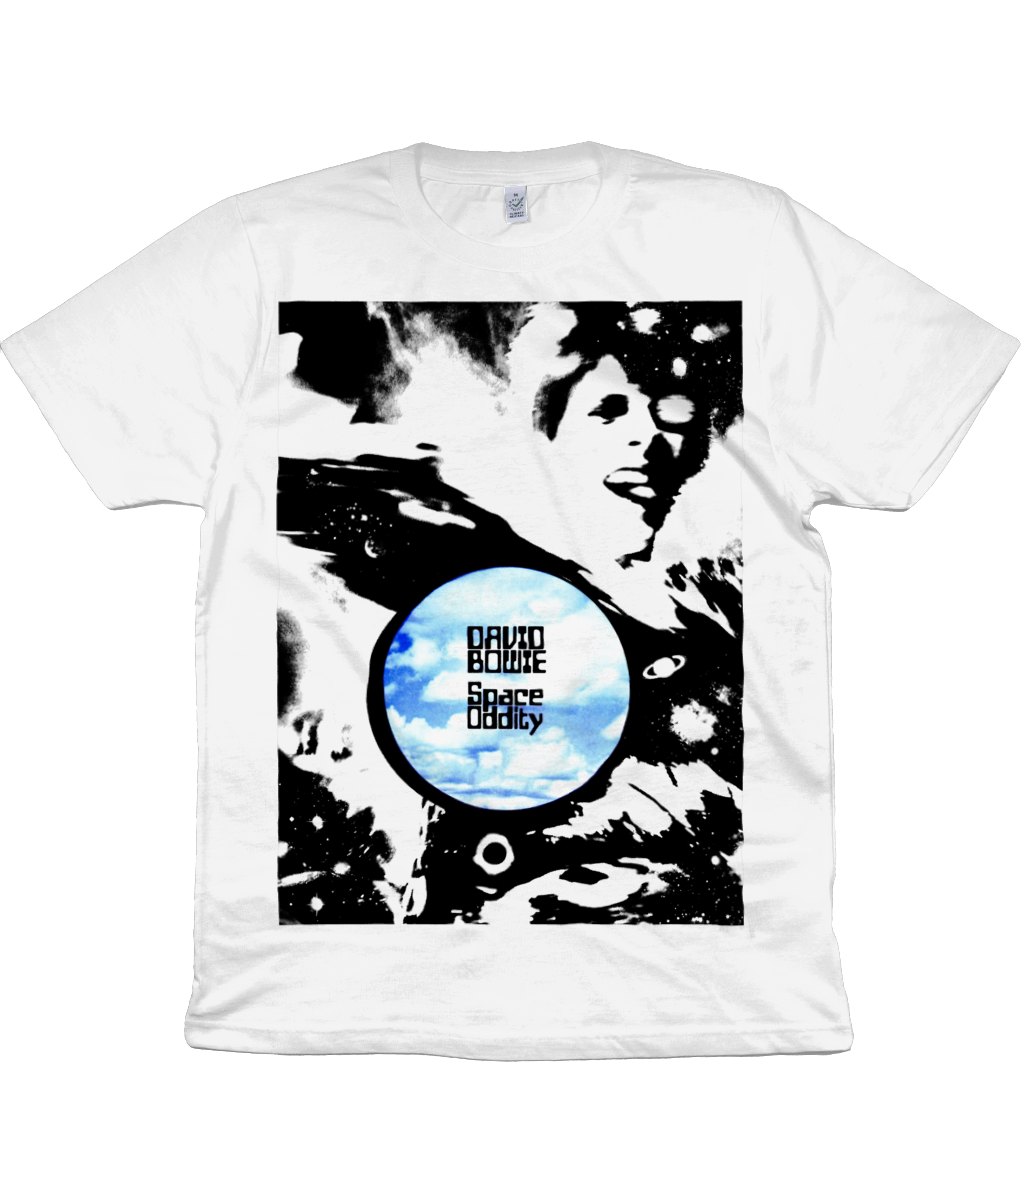 David Bowie - Space Oddity - 1969 - White Shirt